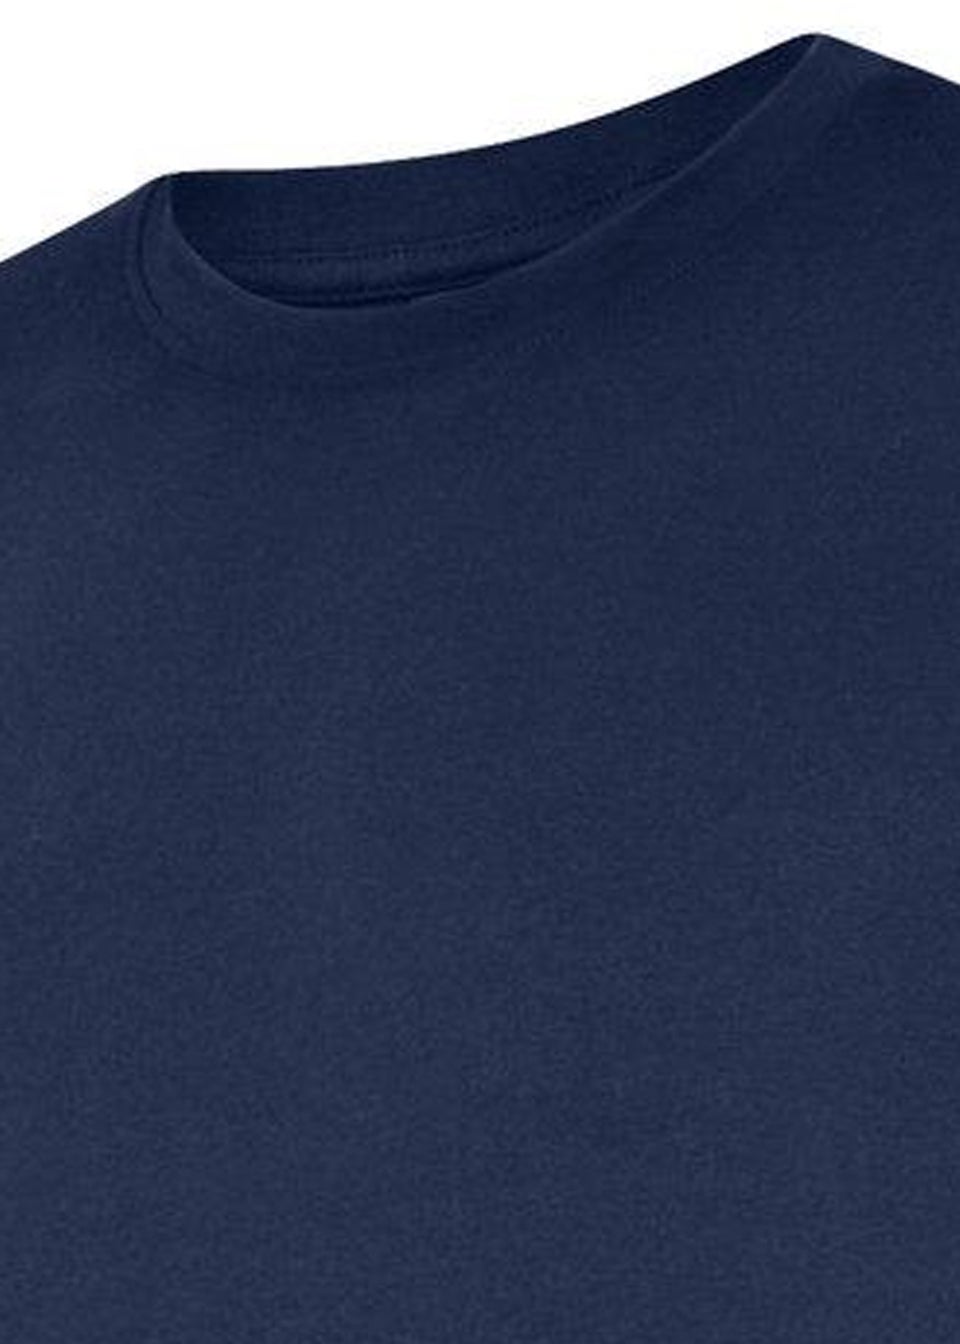 Umbro Kids Navy/White Club Leisure T-Shirt (7-10yrs)